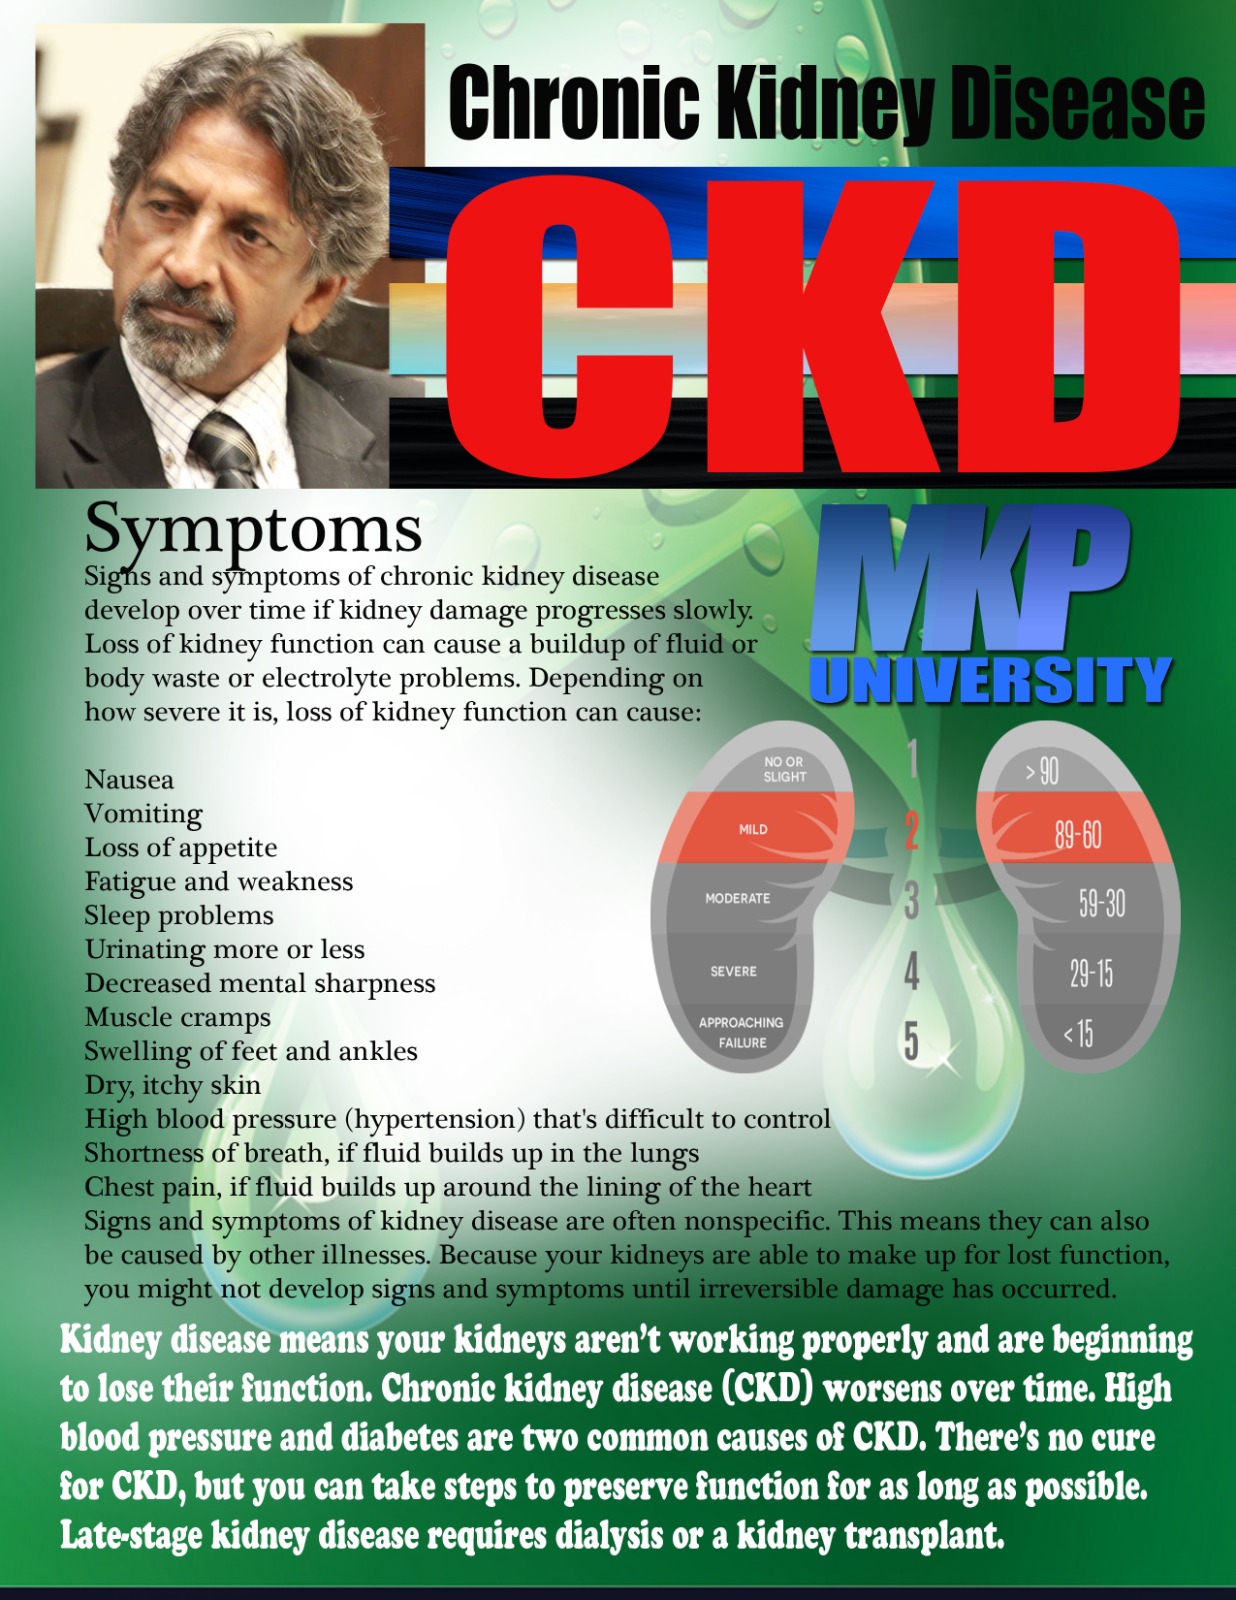 Symptoms of CKD